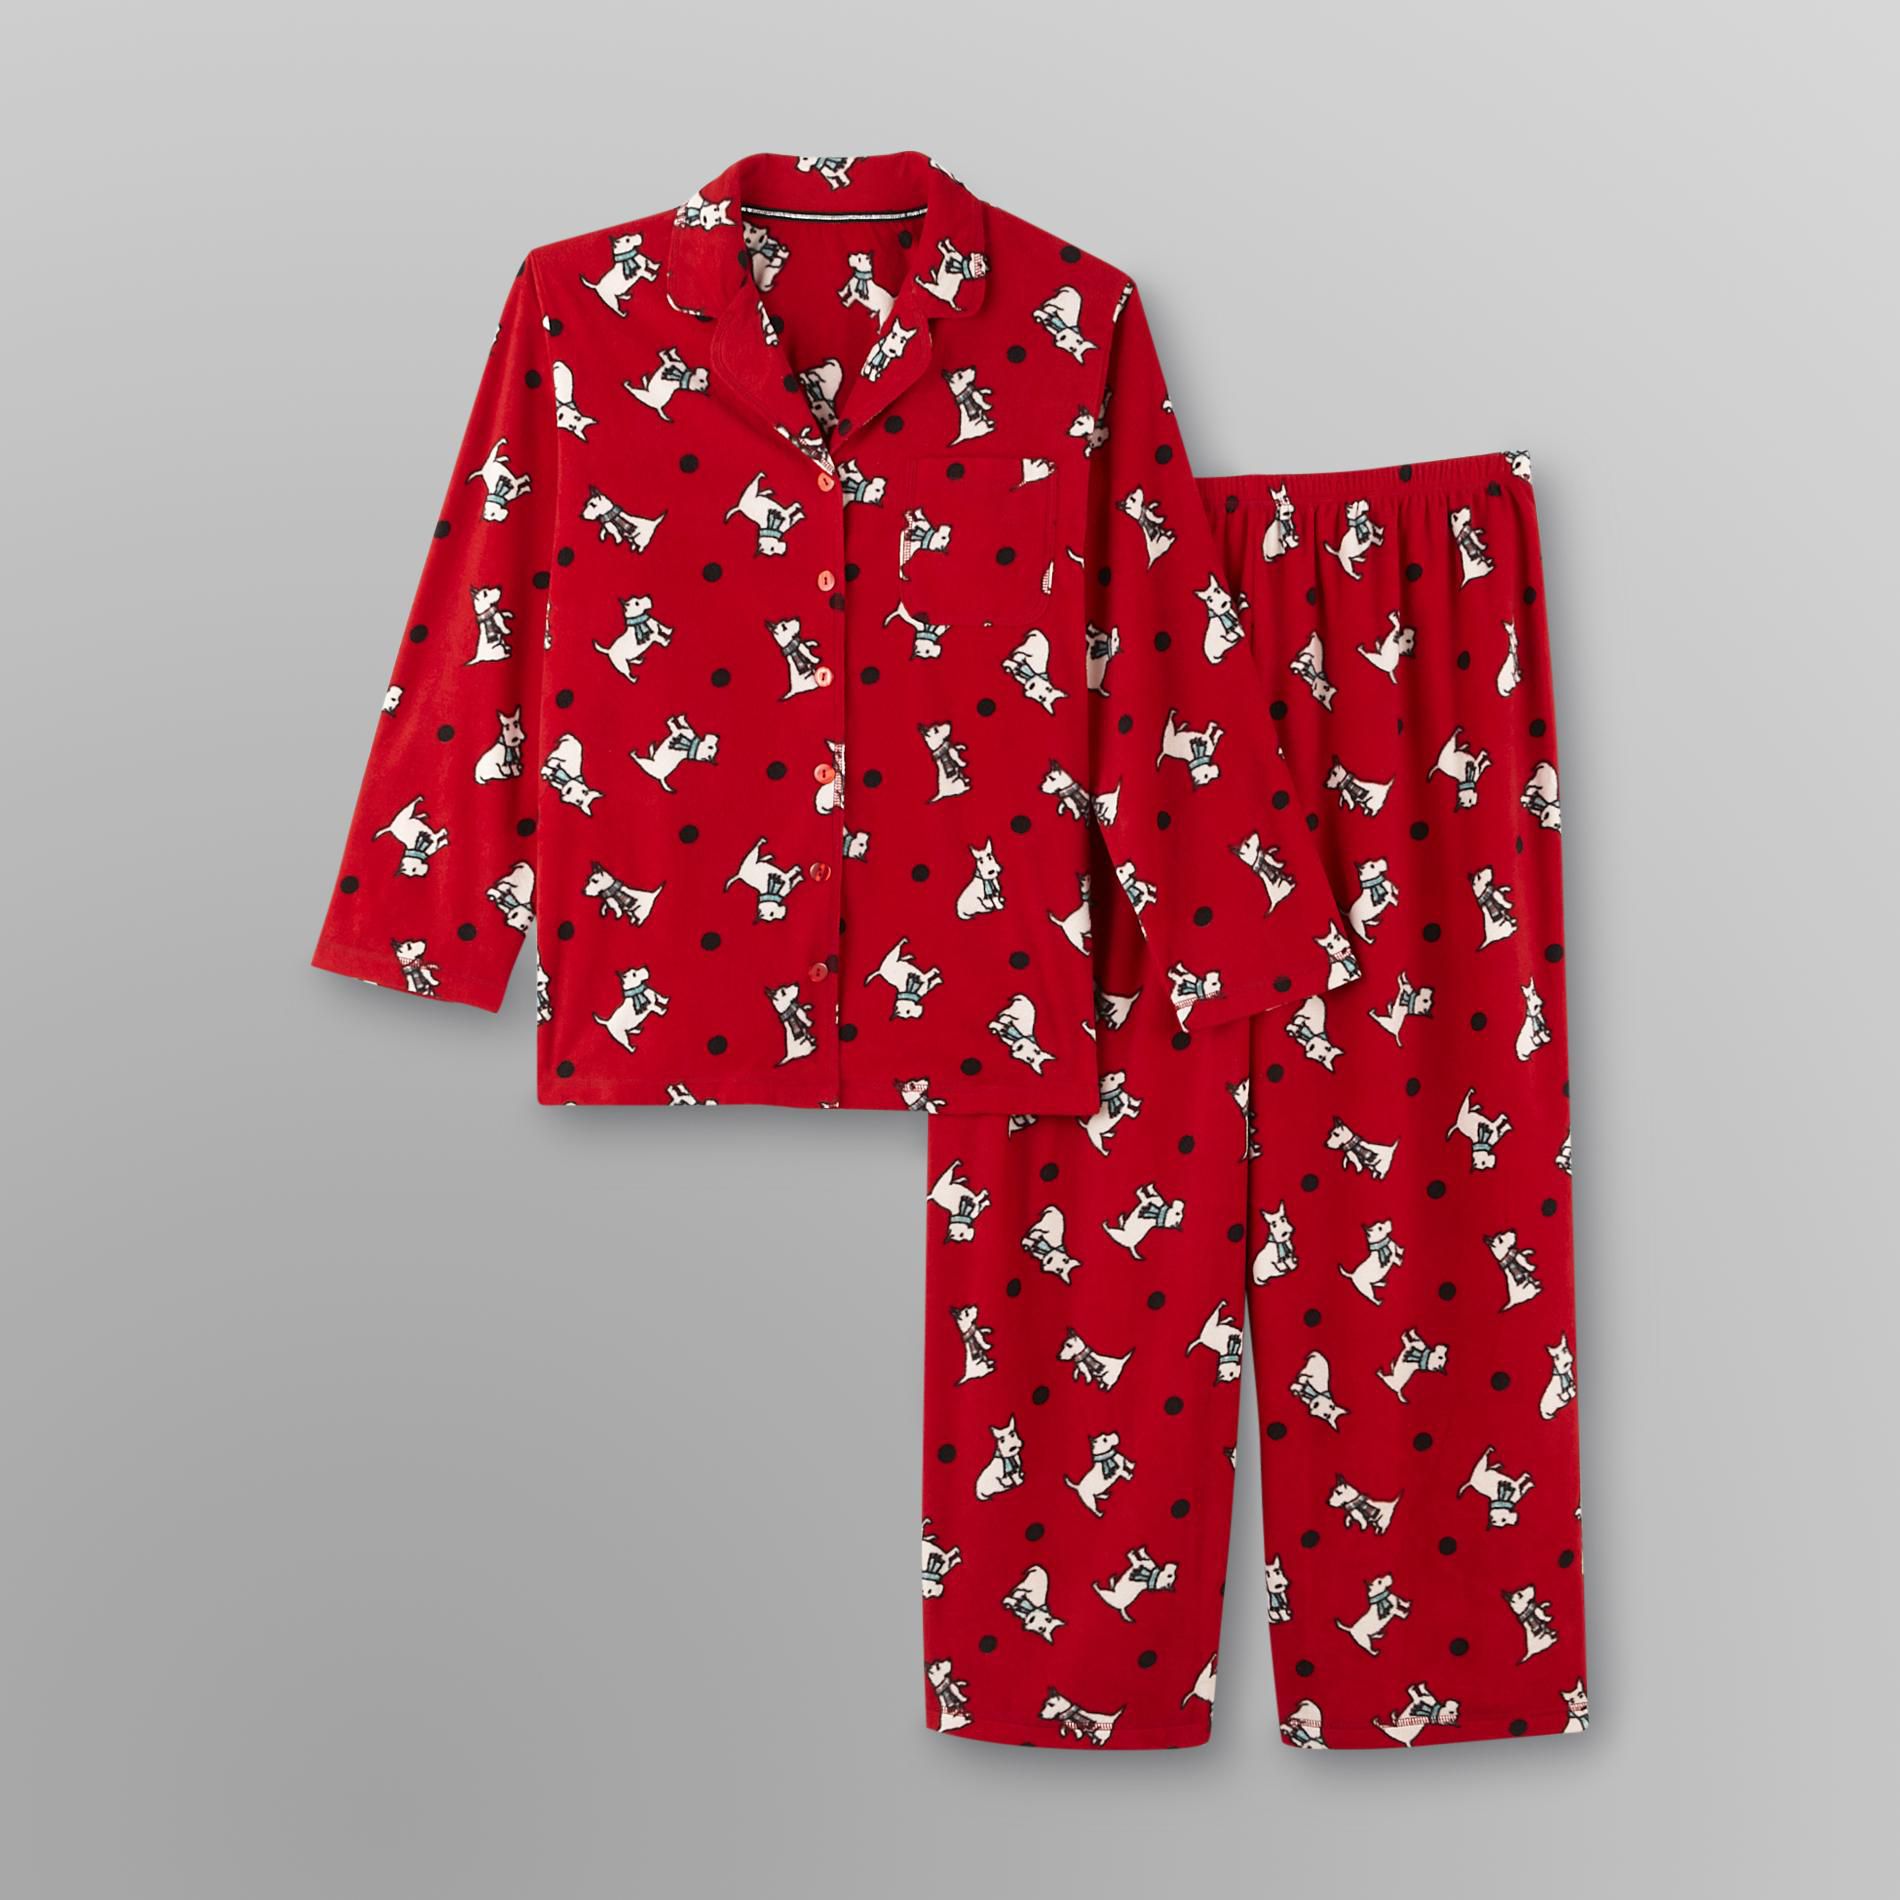 Covington Women's Microfleece Pajamas - Terrier